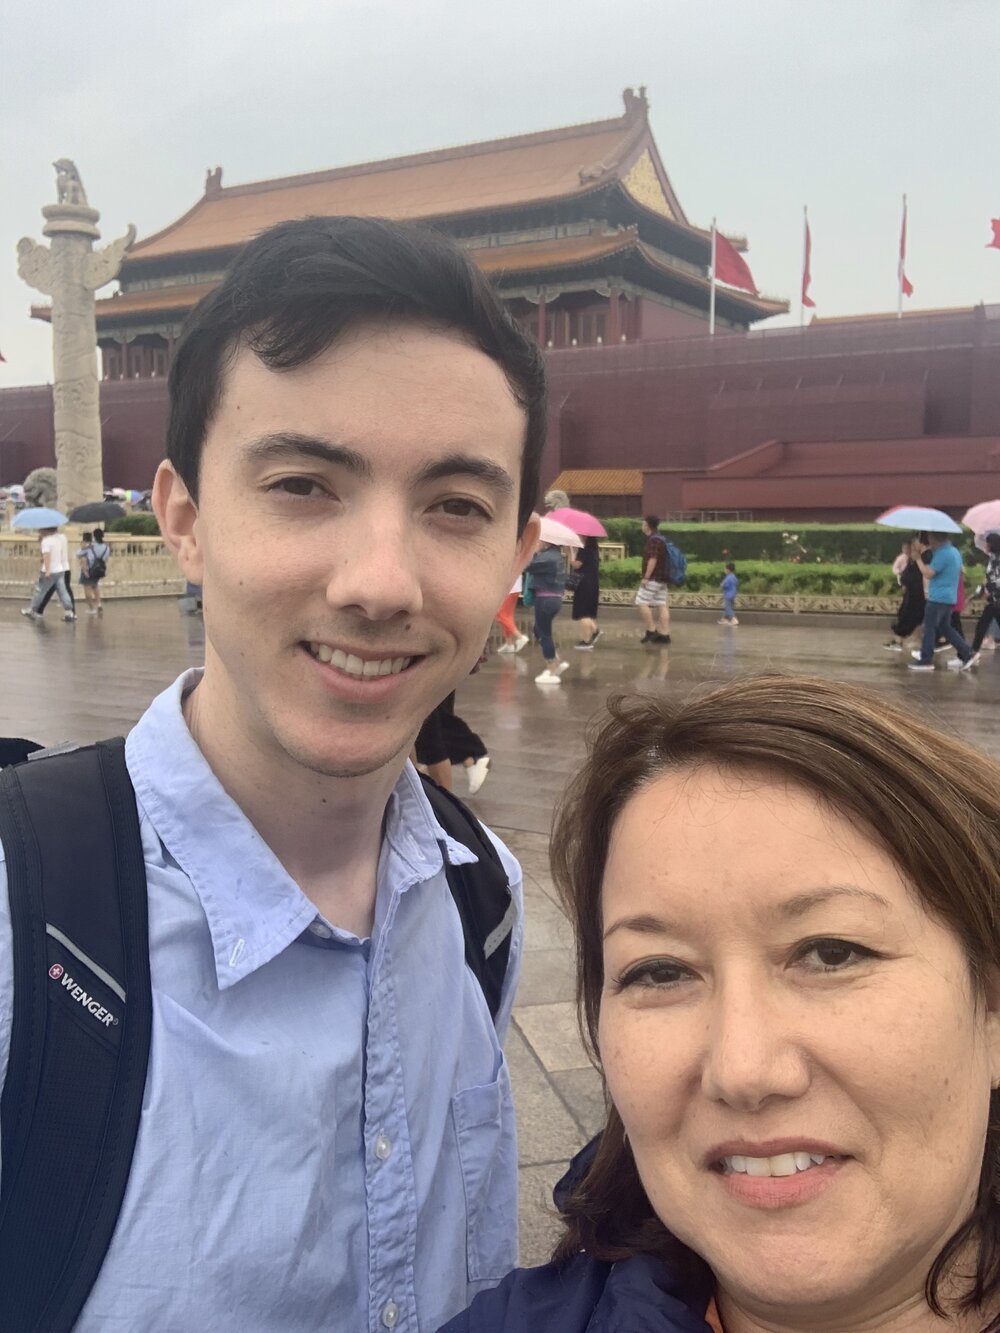   Tiananmen Square/Forbidden City with Adam. June 2019.  